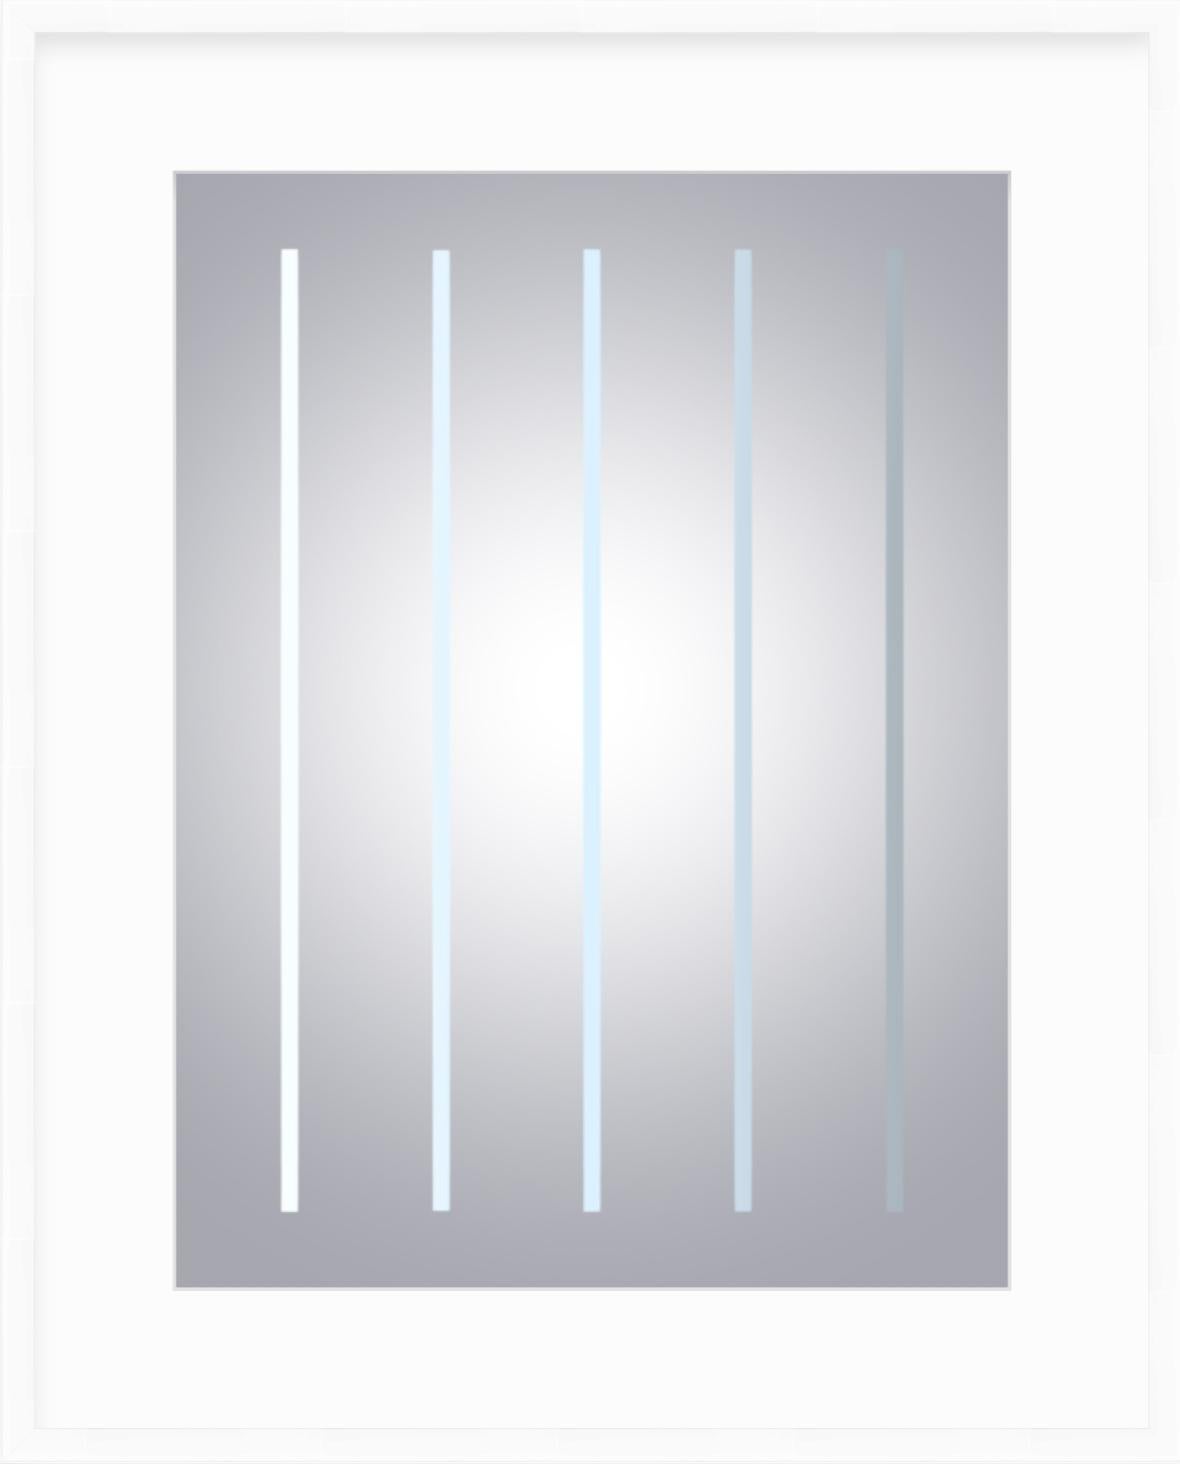 Pletneva Abstract Print - "September" - minimal digital print, silver, with white mat